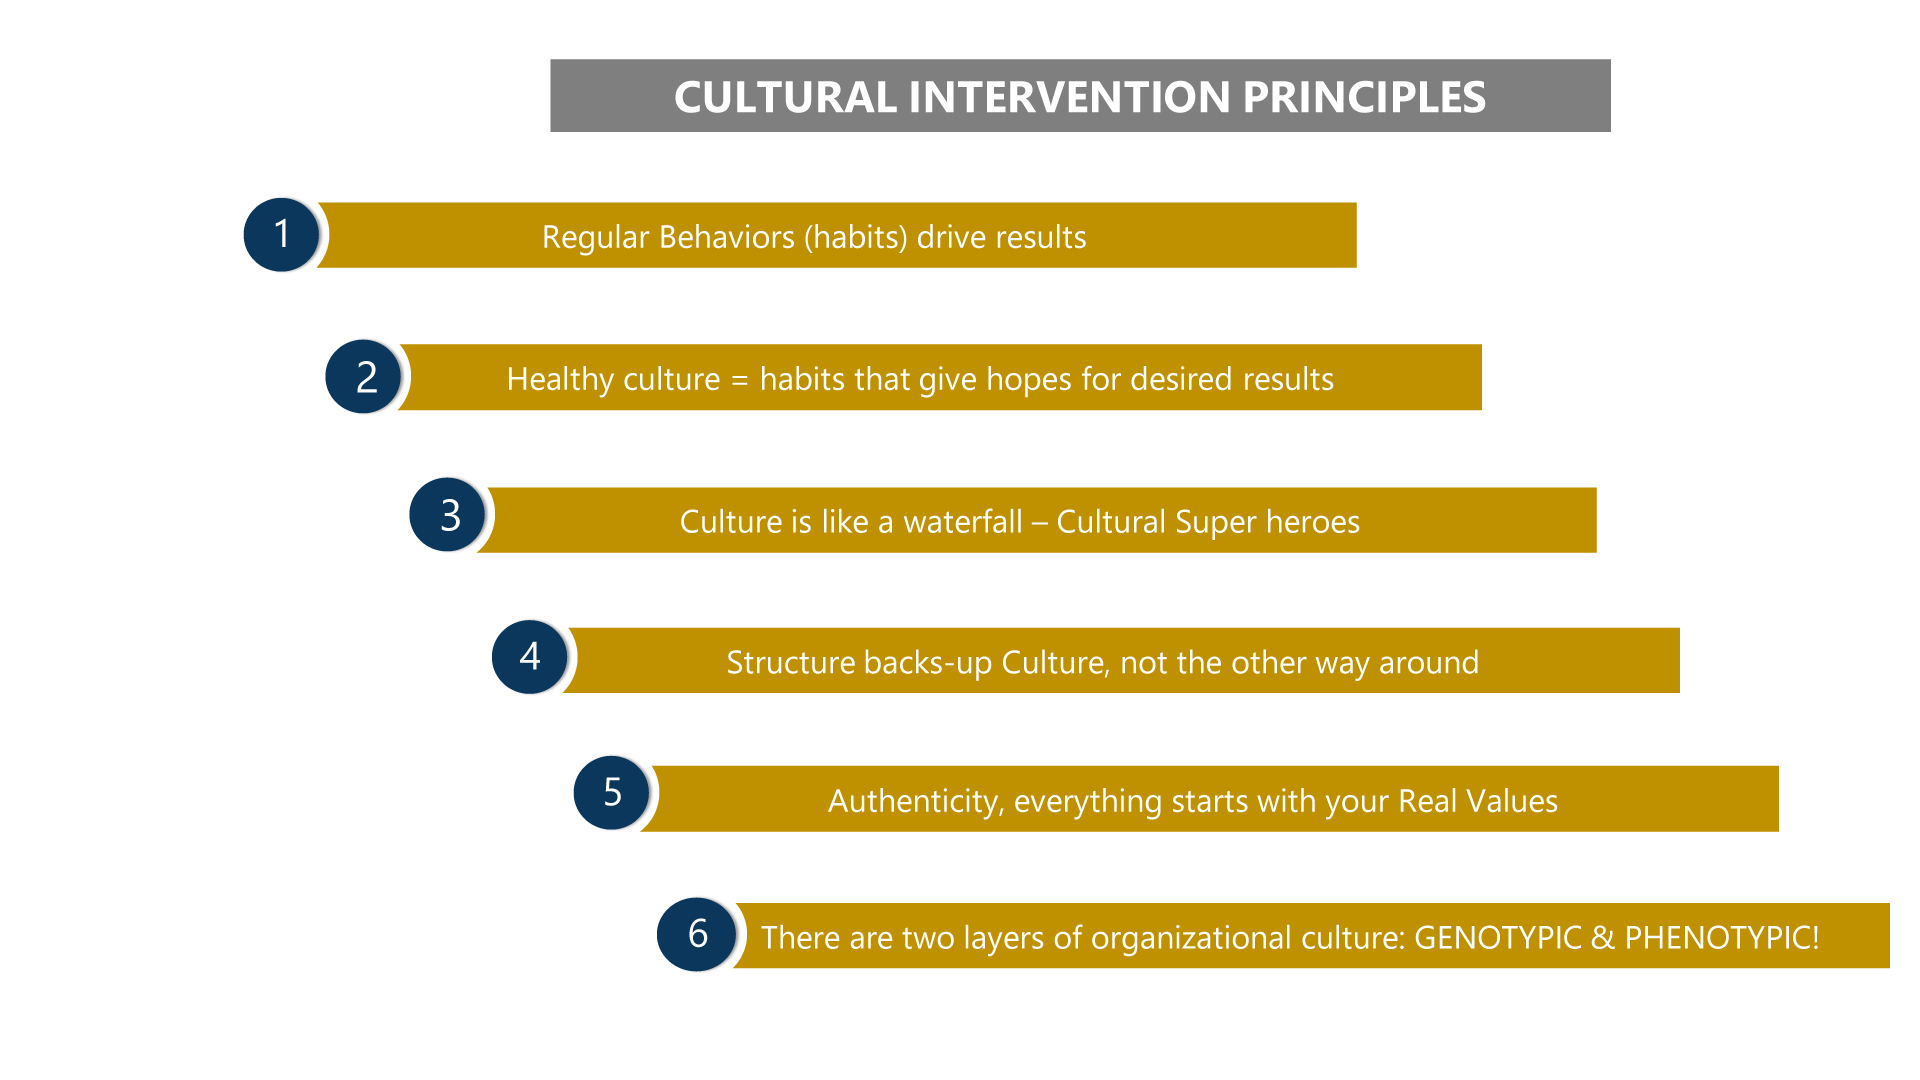 Cultural intervention principles